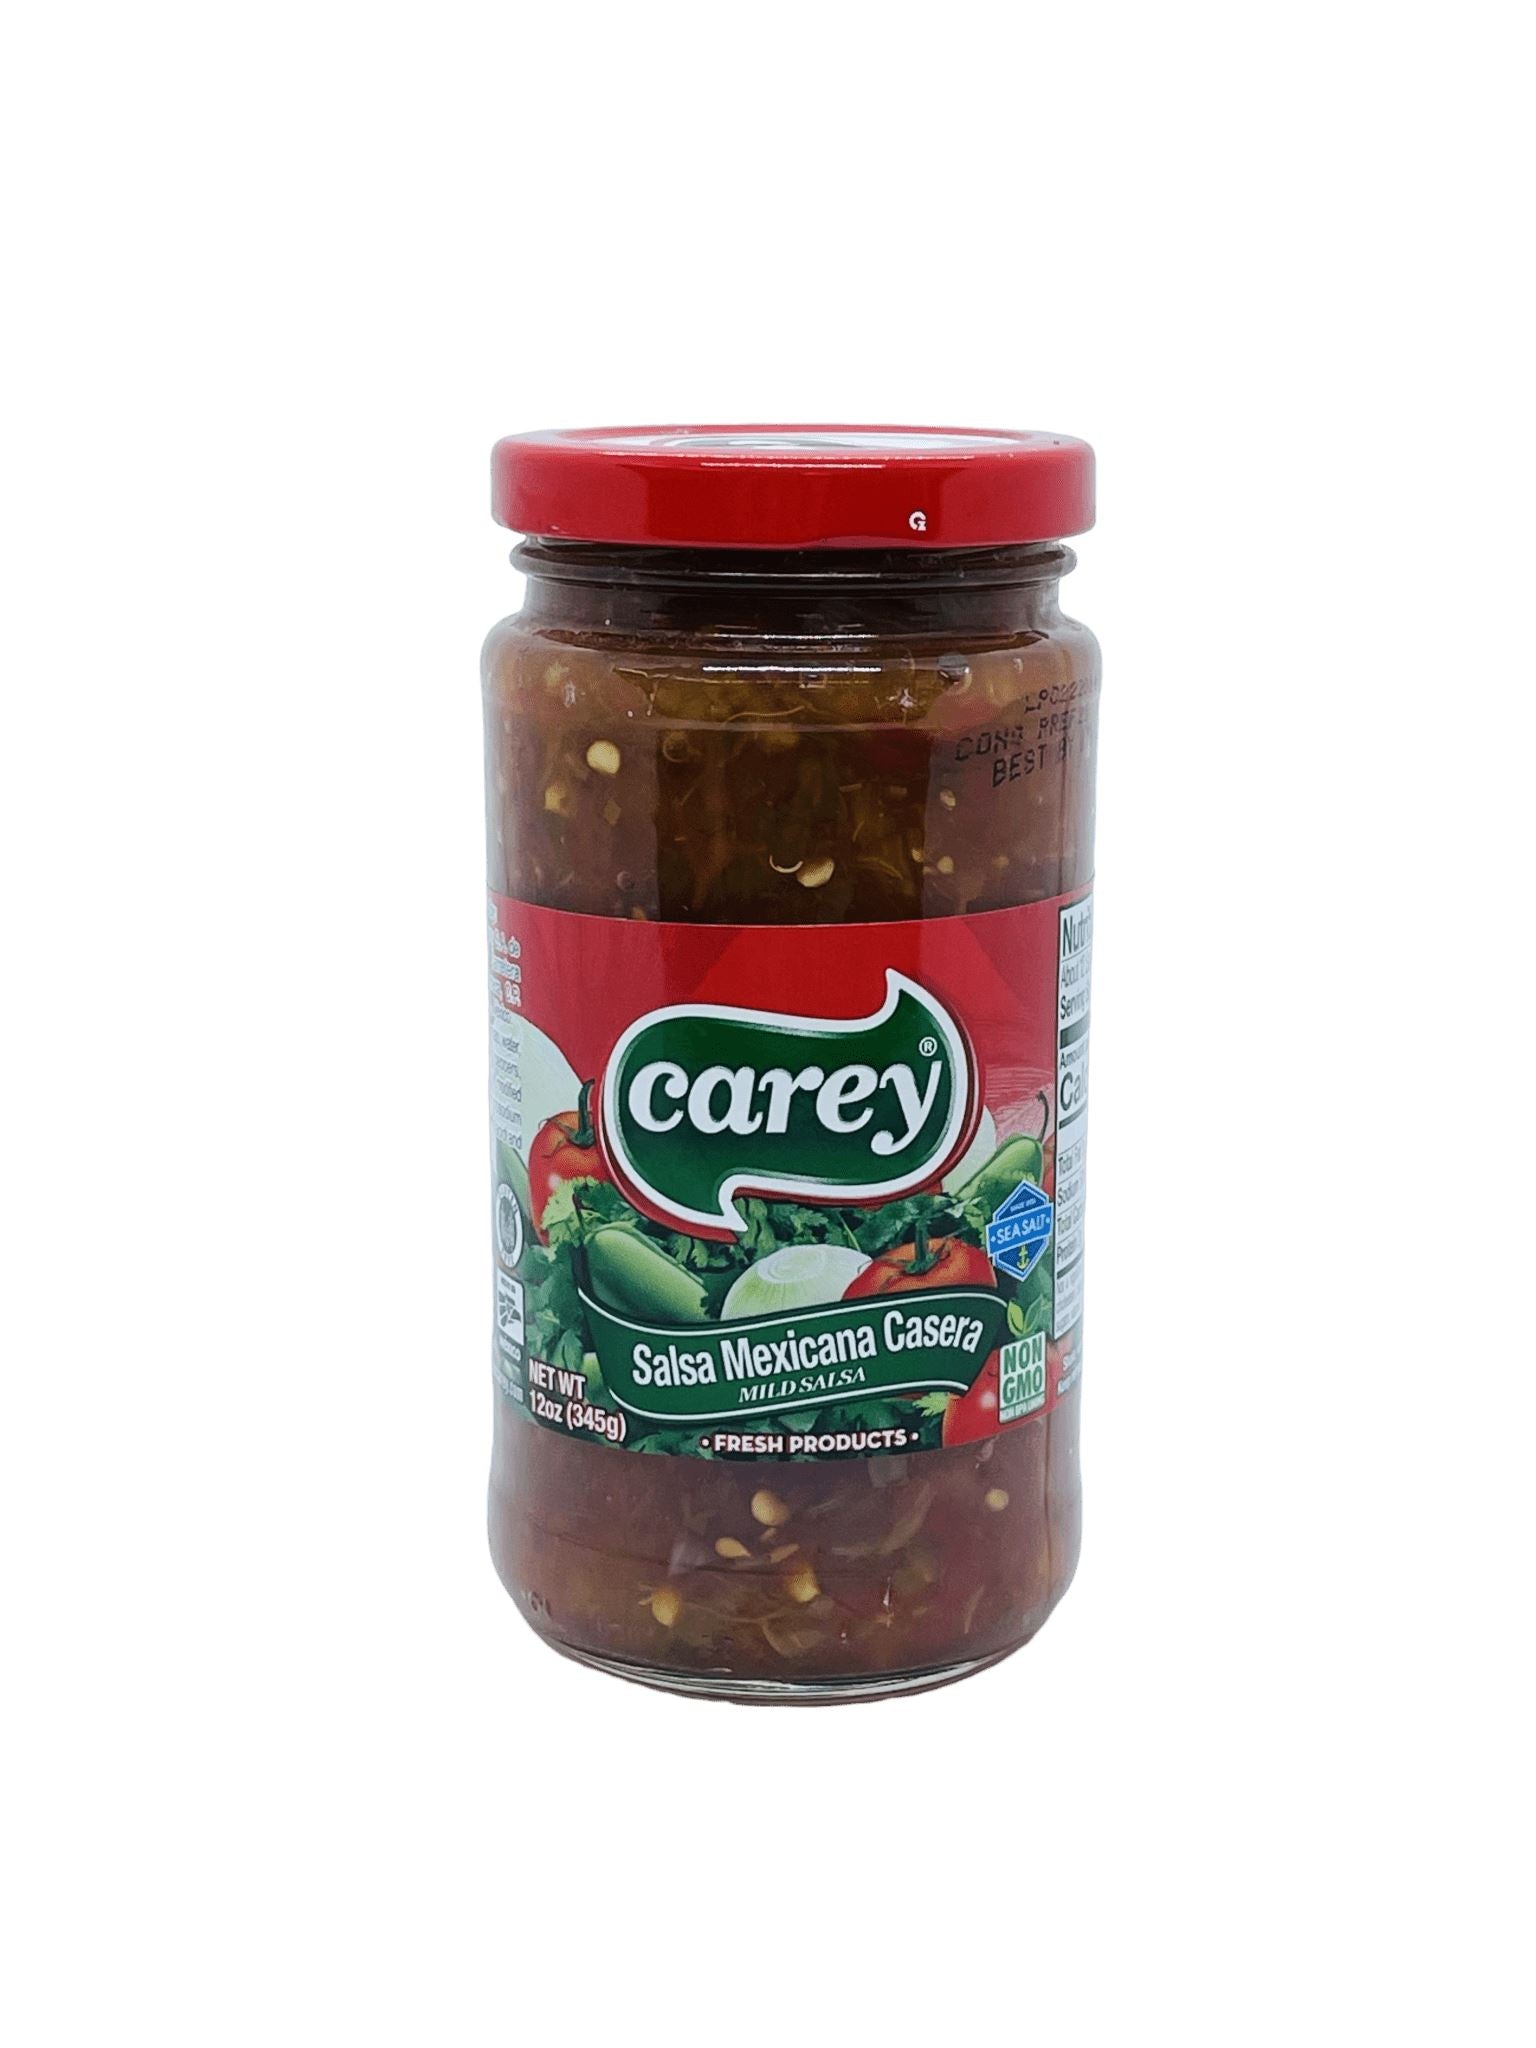 Carey Homestyle Mexican Sauce (Salsa Casera) 345g Sauces Carey 